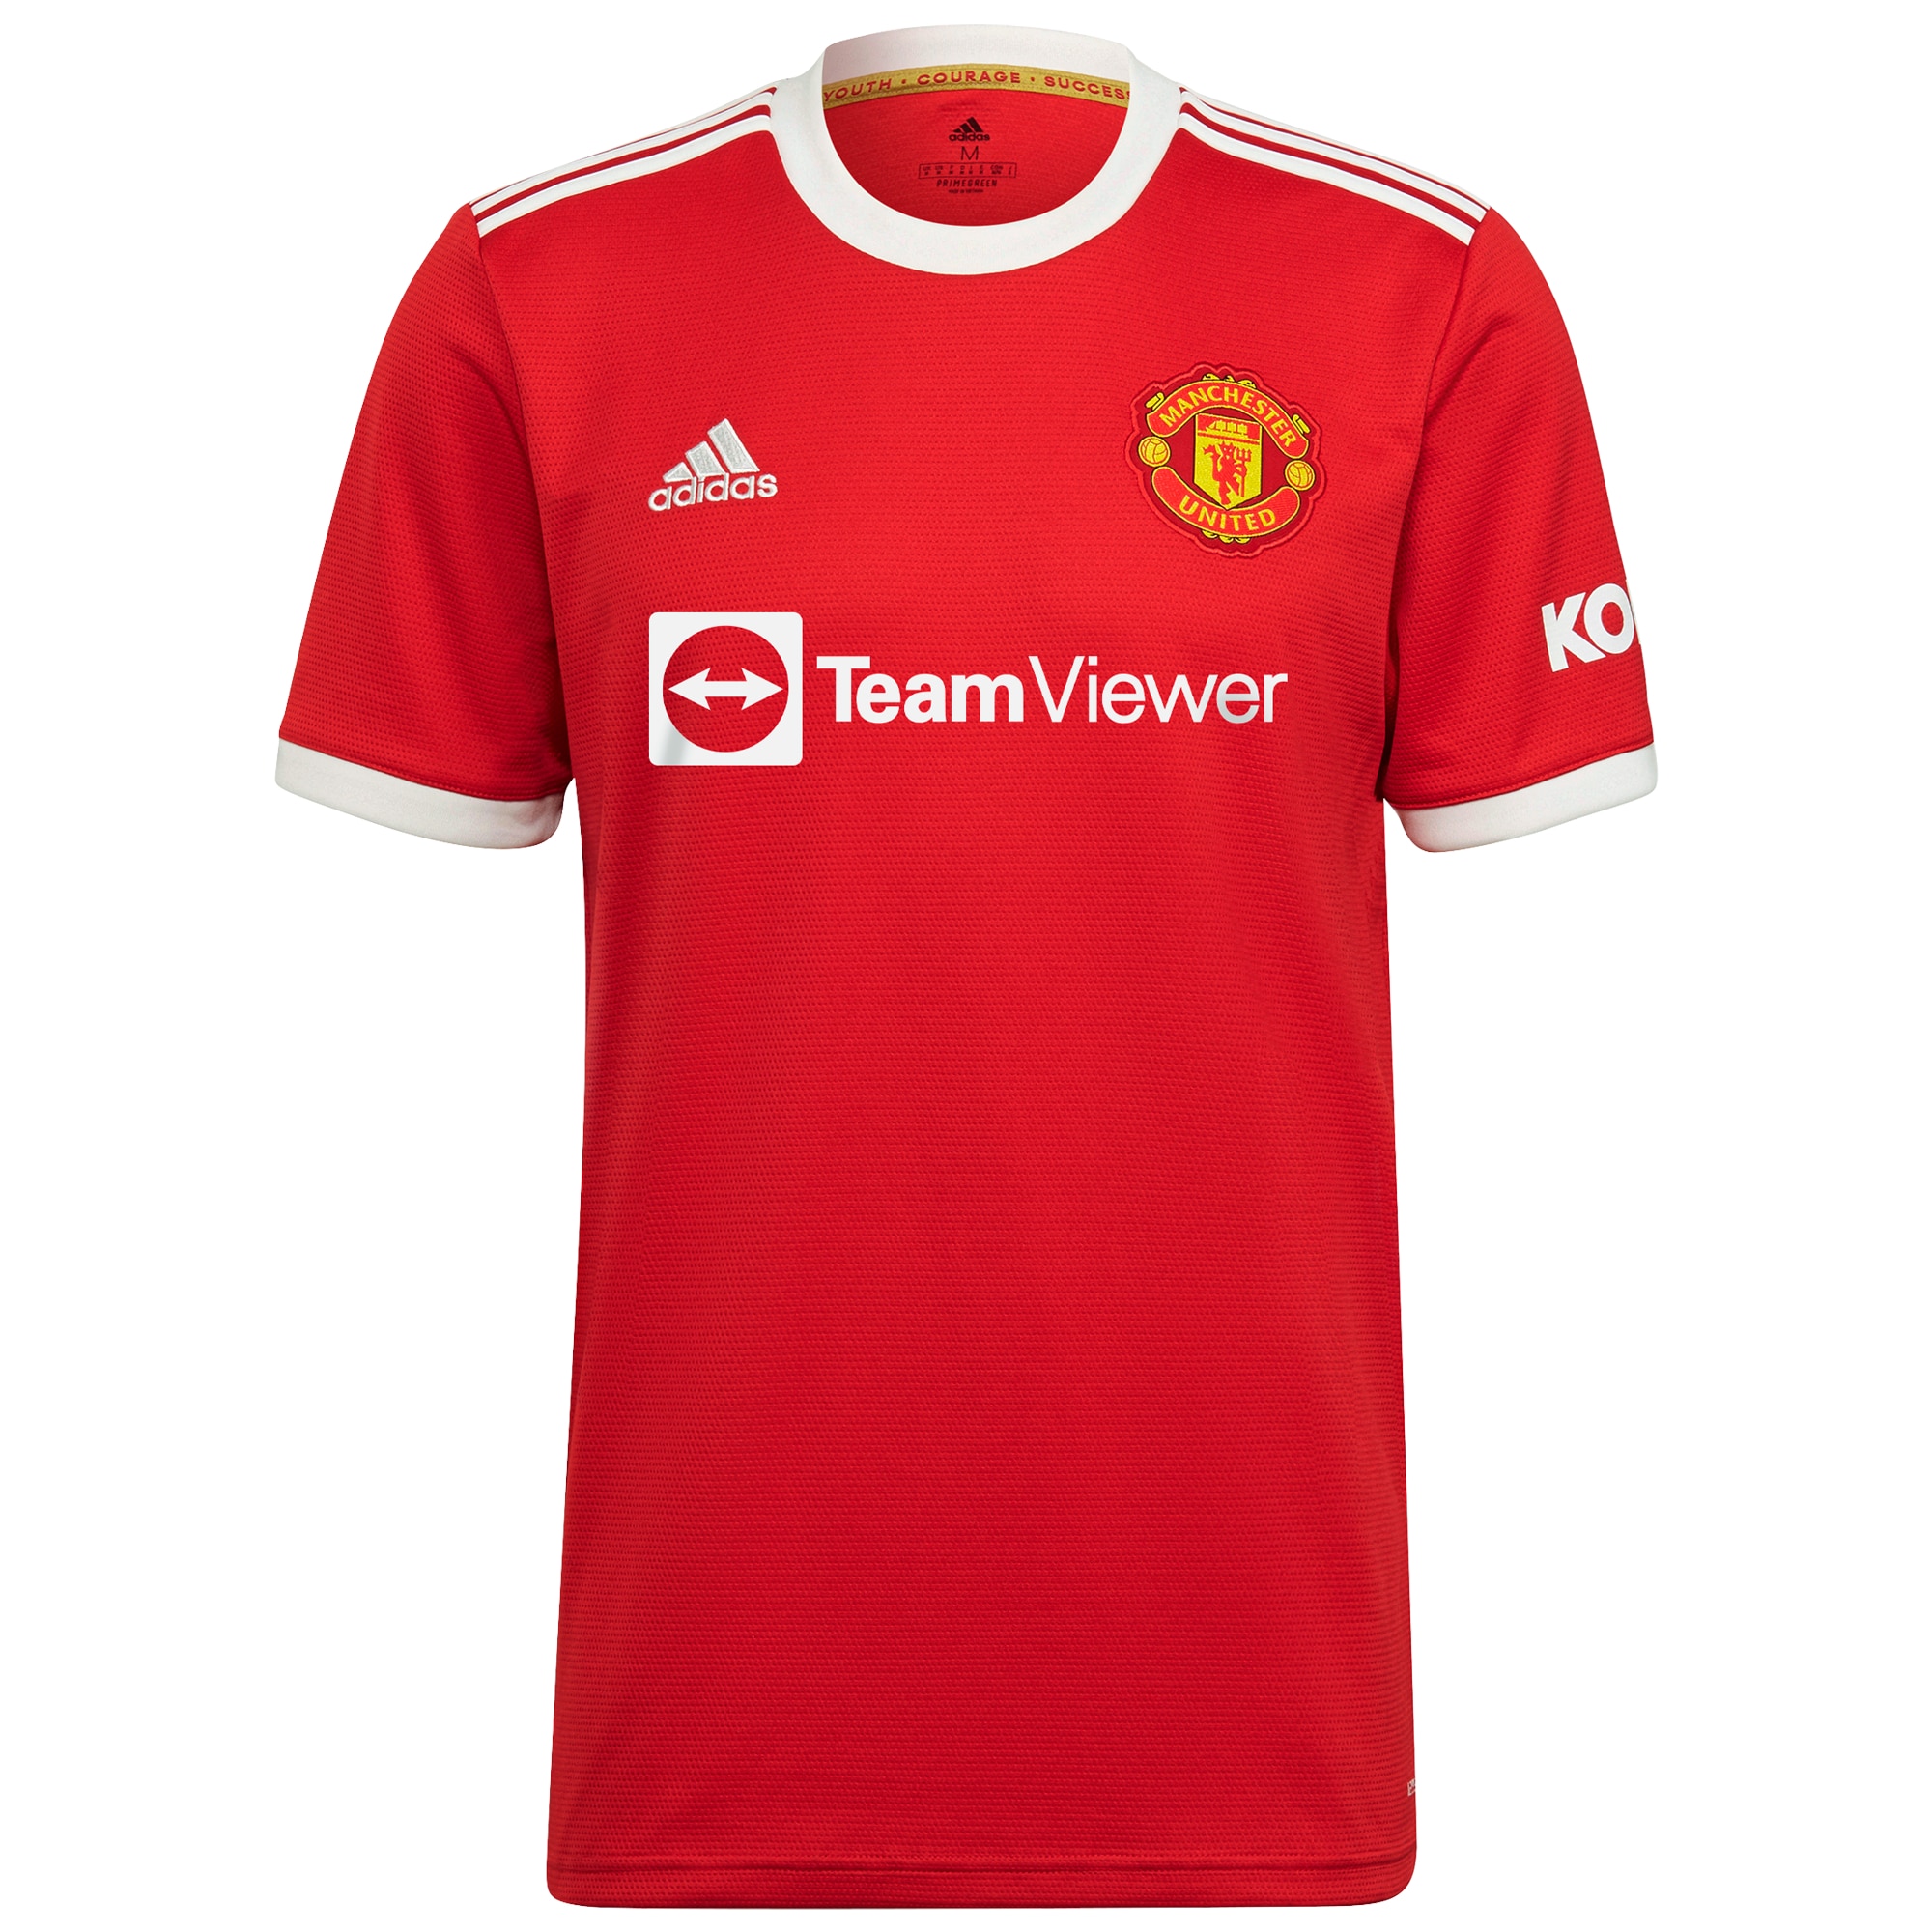 Men's Manchester United Jerseys Red Donny Van De Beek 2021/22 Home Printed Player Style